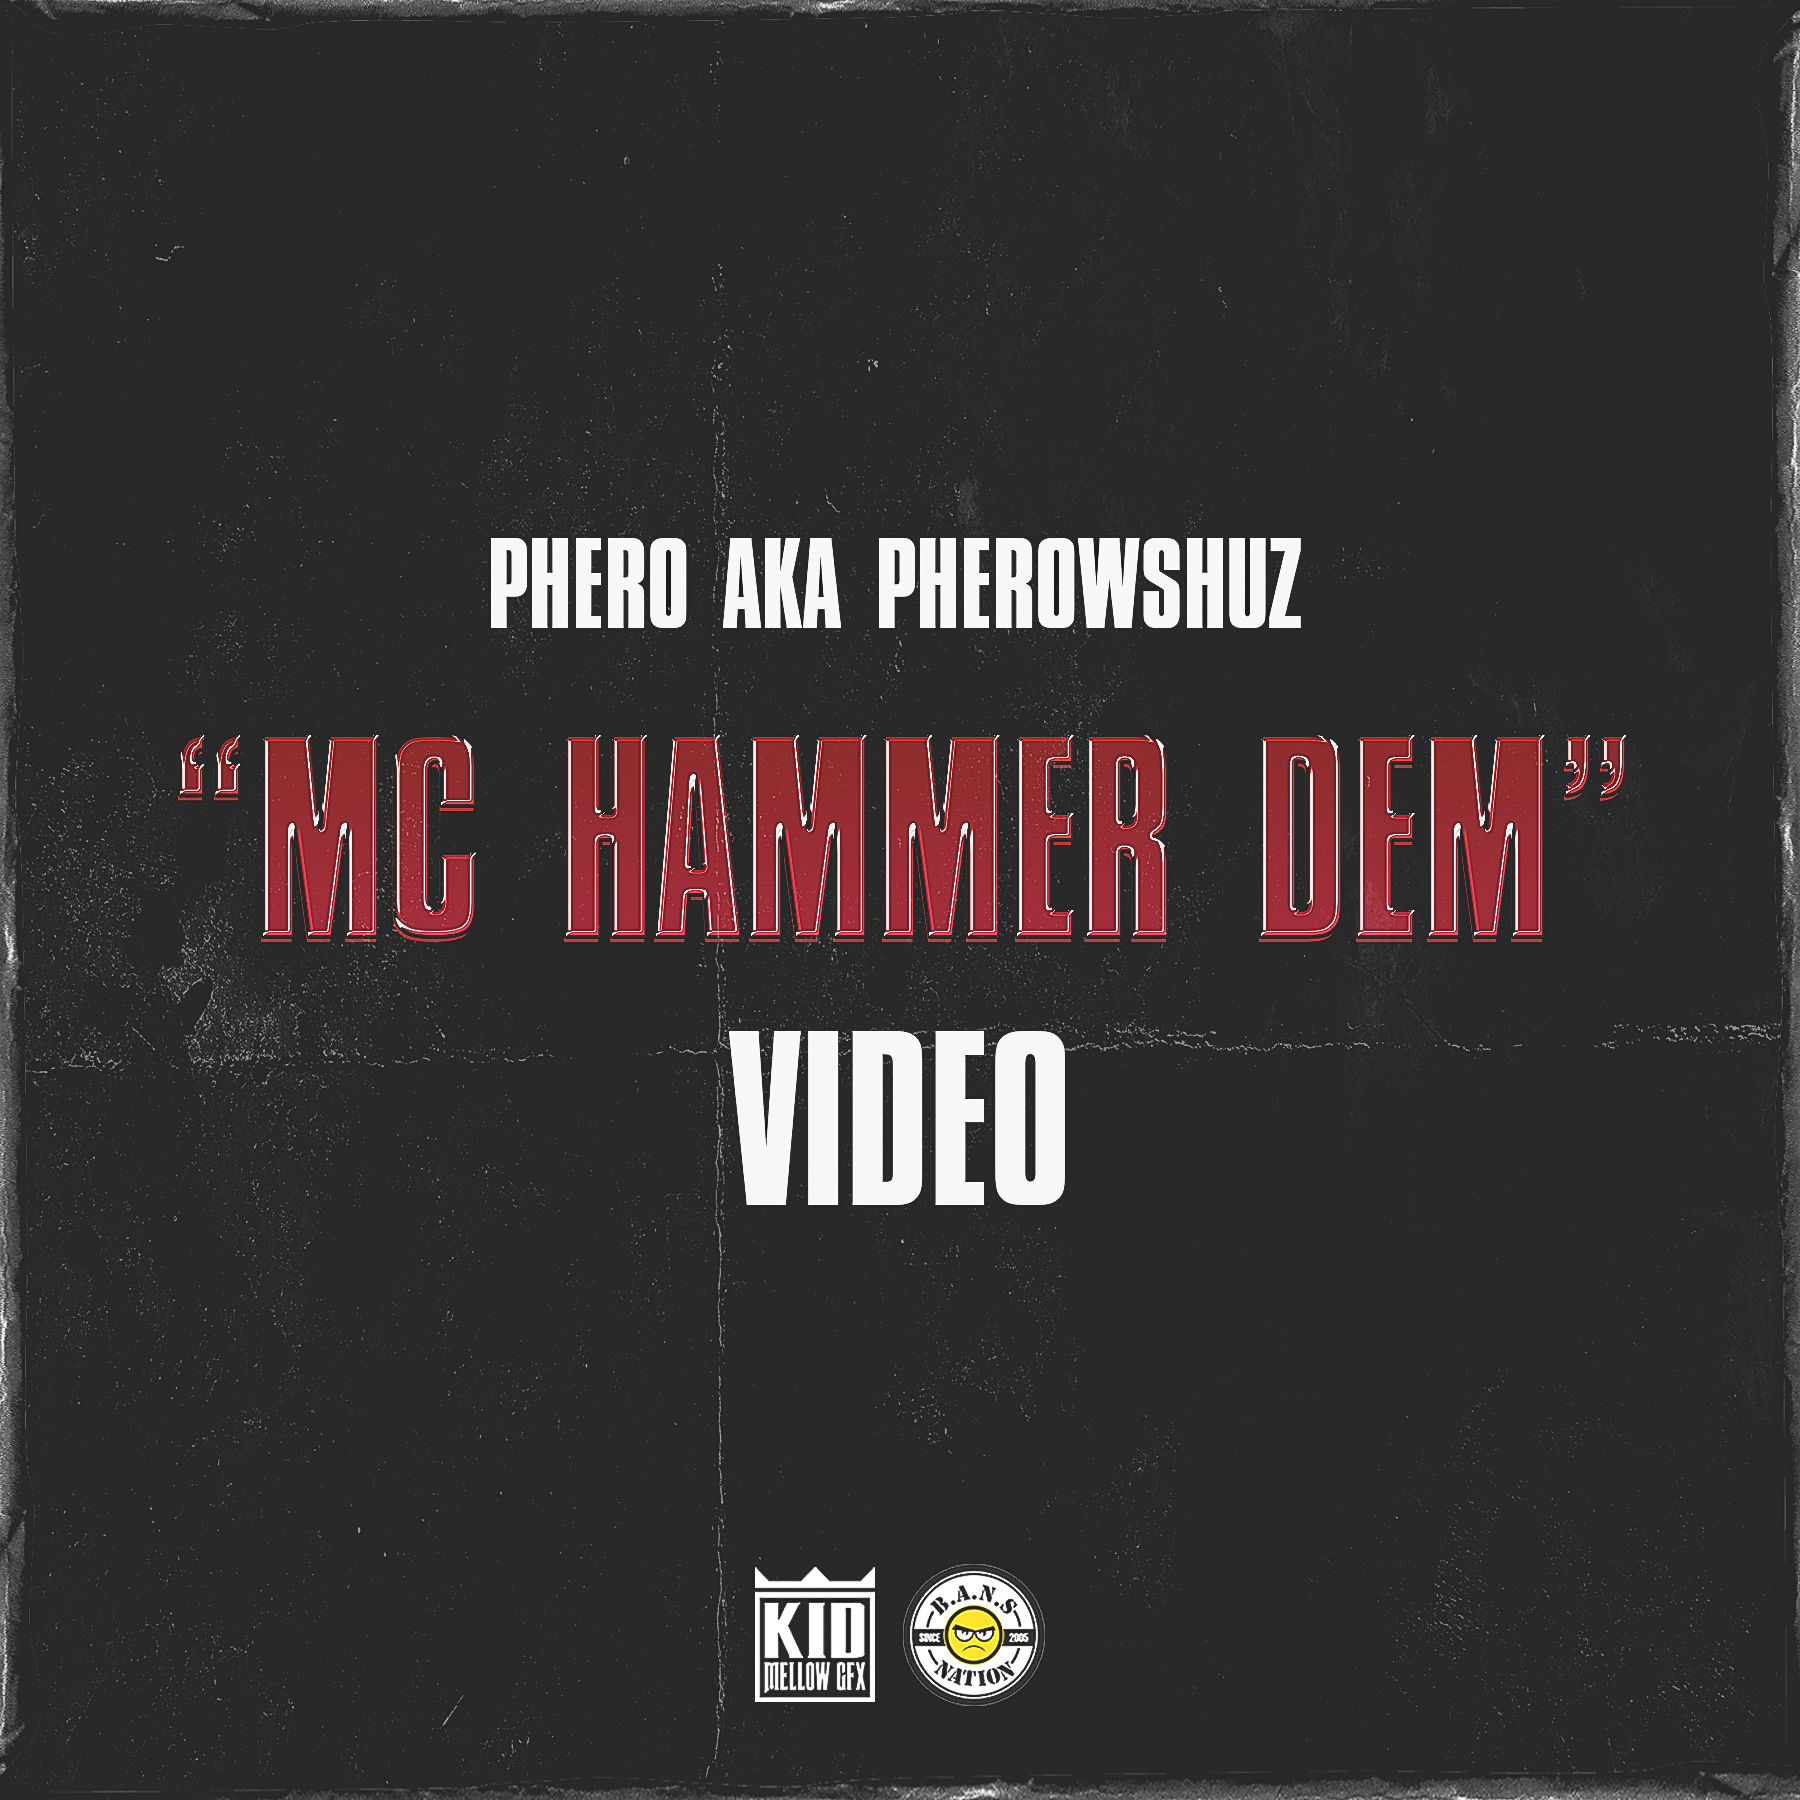 VIDEO: Pherowshuz - MC Hammer Dem